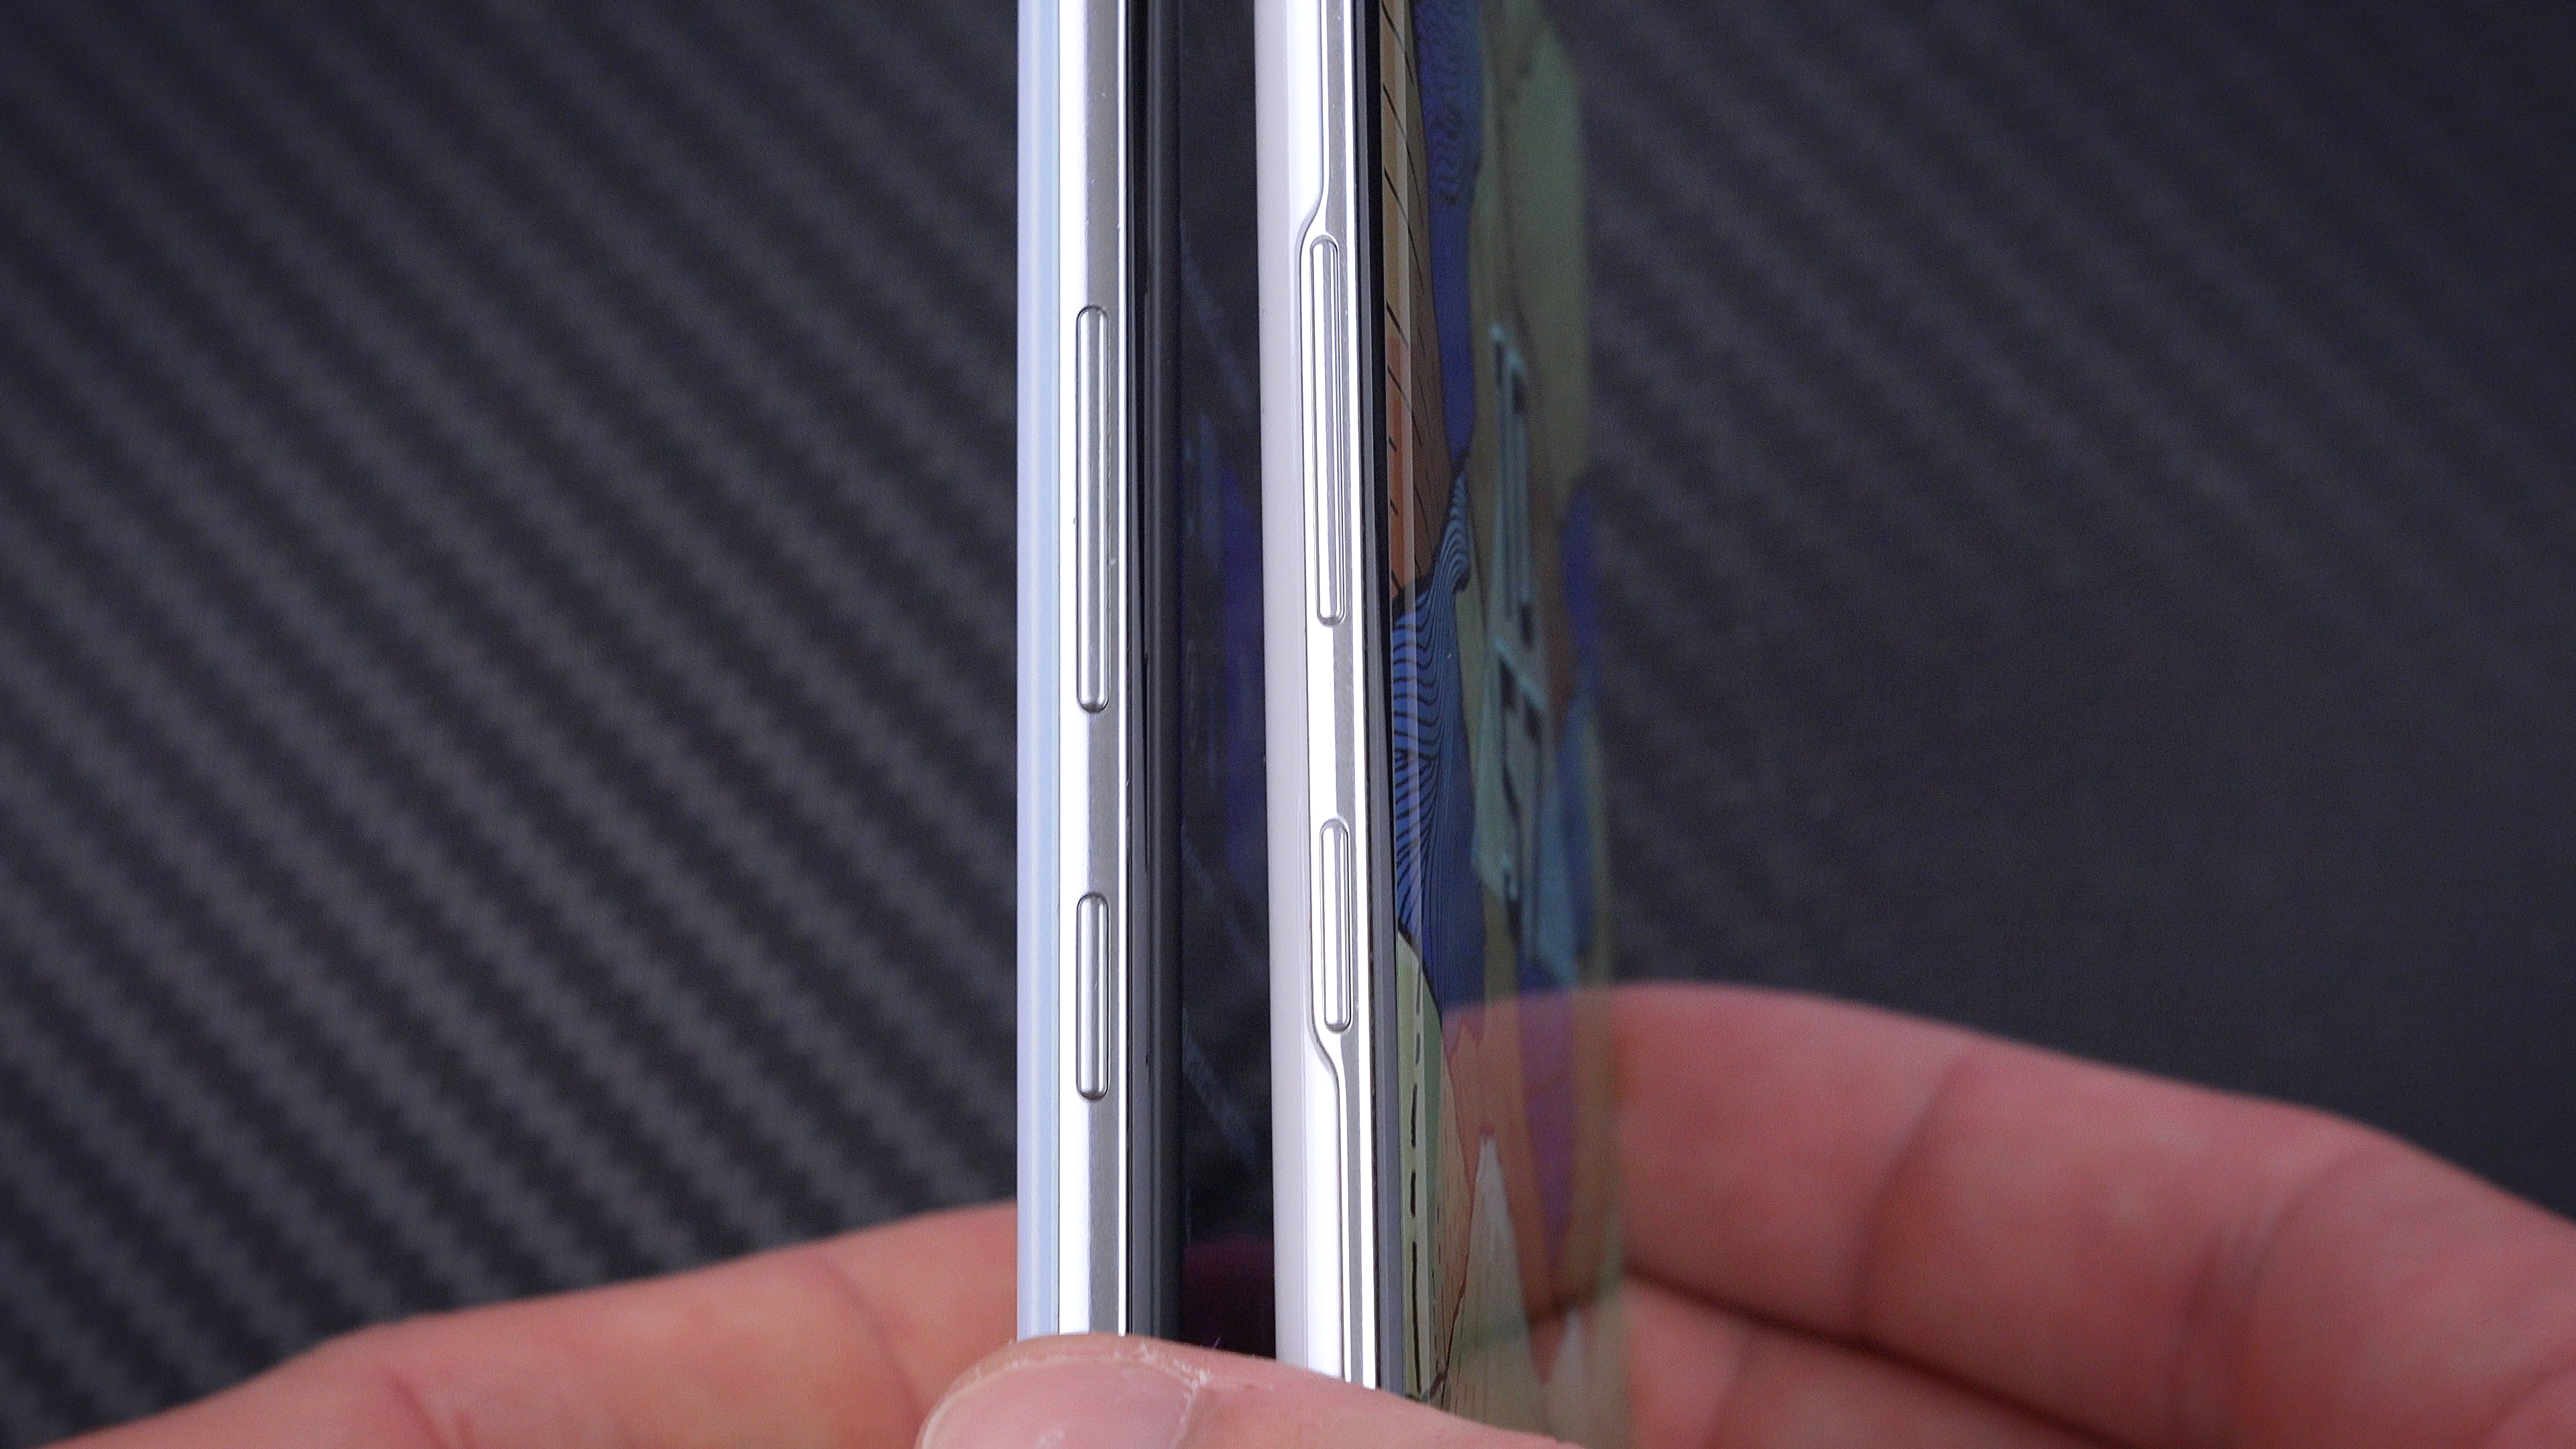 Note 10 Plus'a belgesel çektik! 'Samsung Galaxy Note 10 Plus incelemesi'